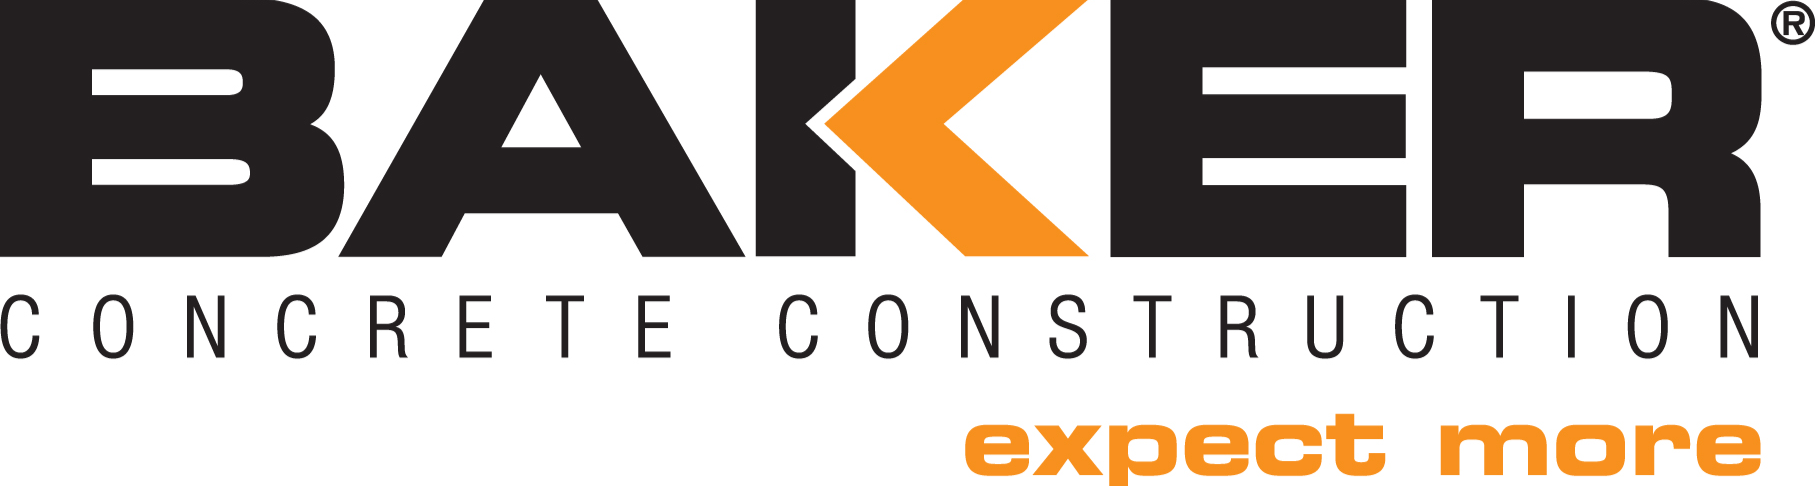 Baker Concrete Construction logo